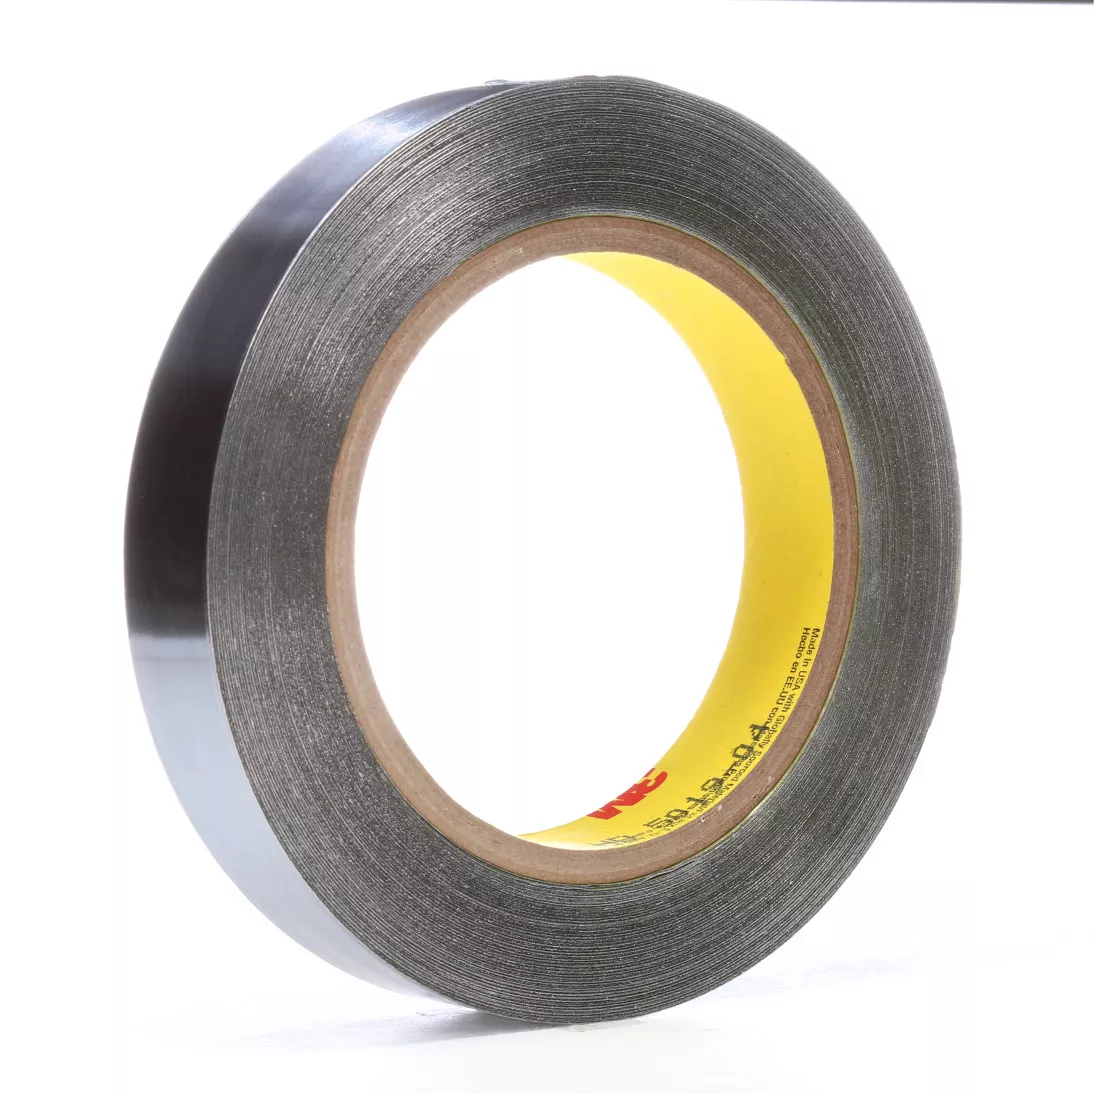 3M™ Lead Foil Tape 421, Dark Silver, 3/4 in x 36 yd, 6.3 mil, 12 rolls
per case